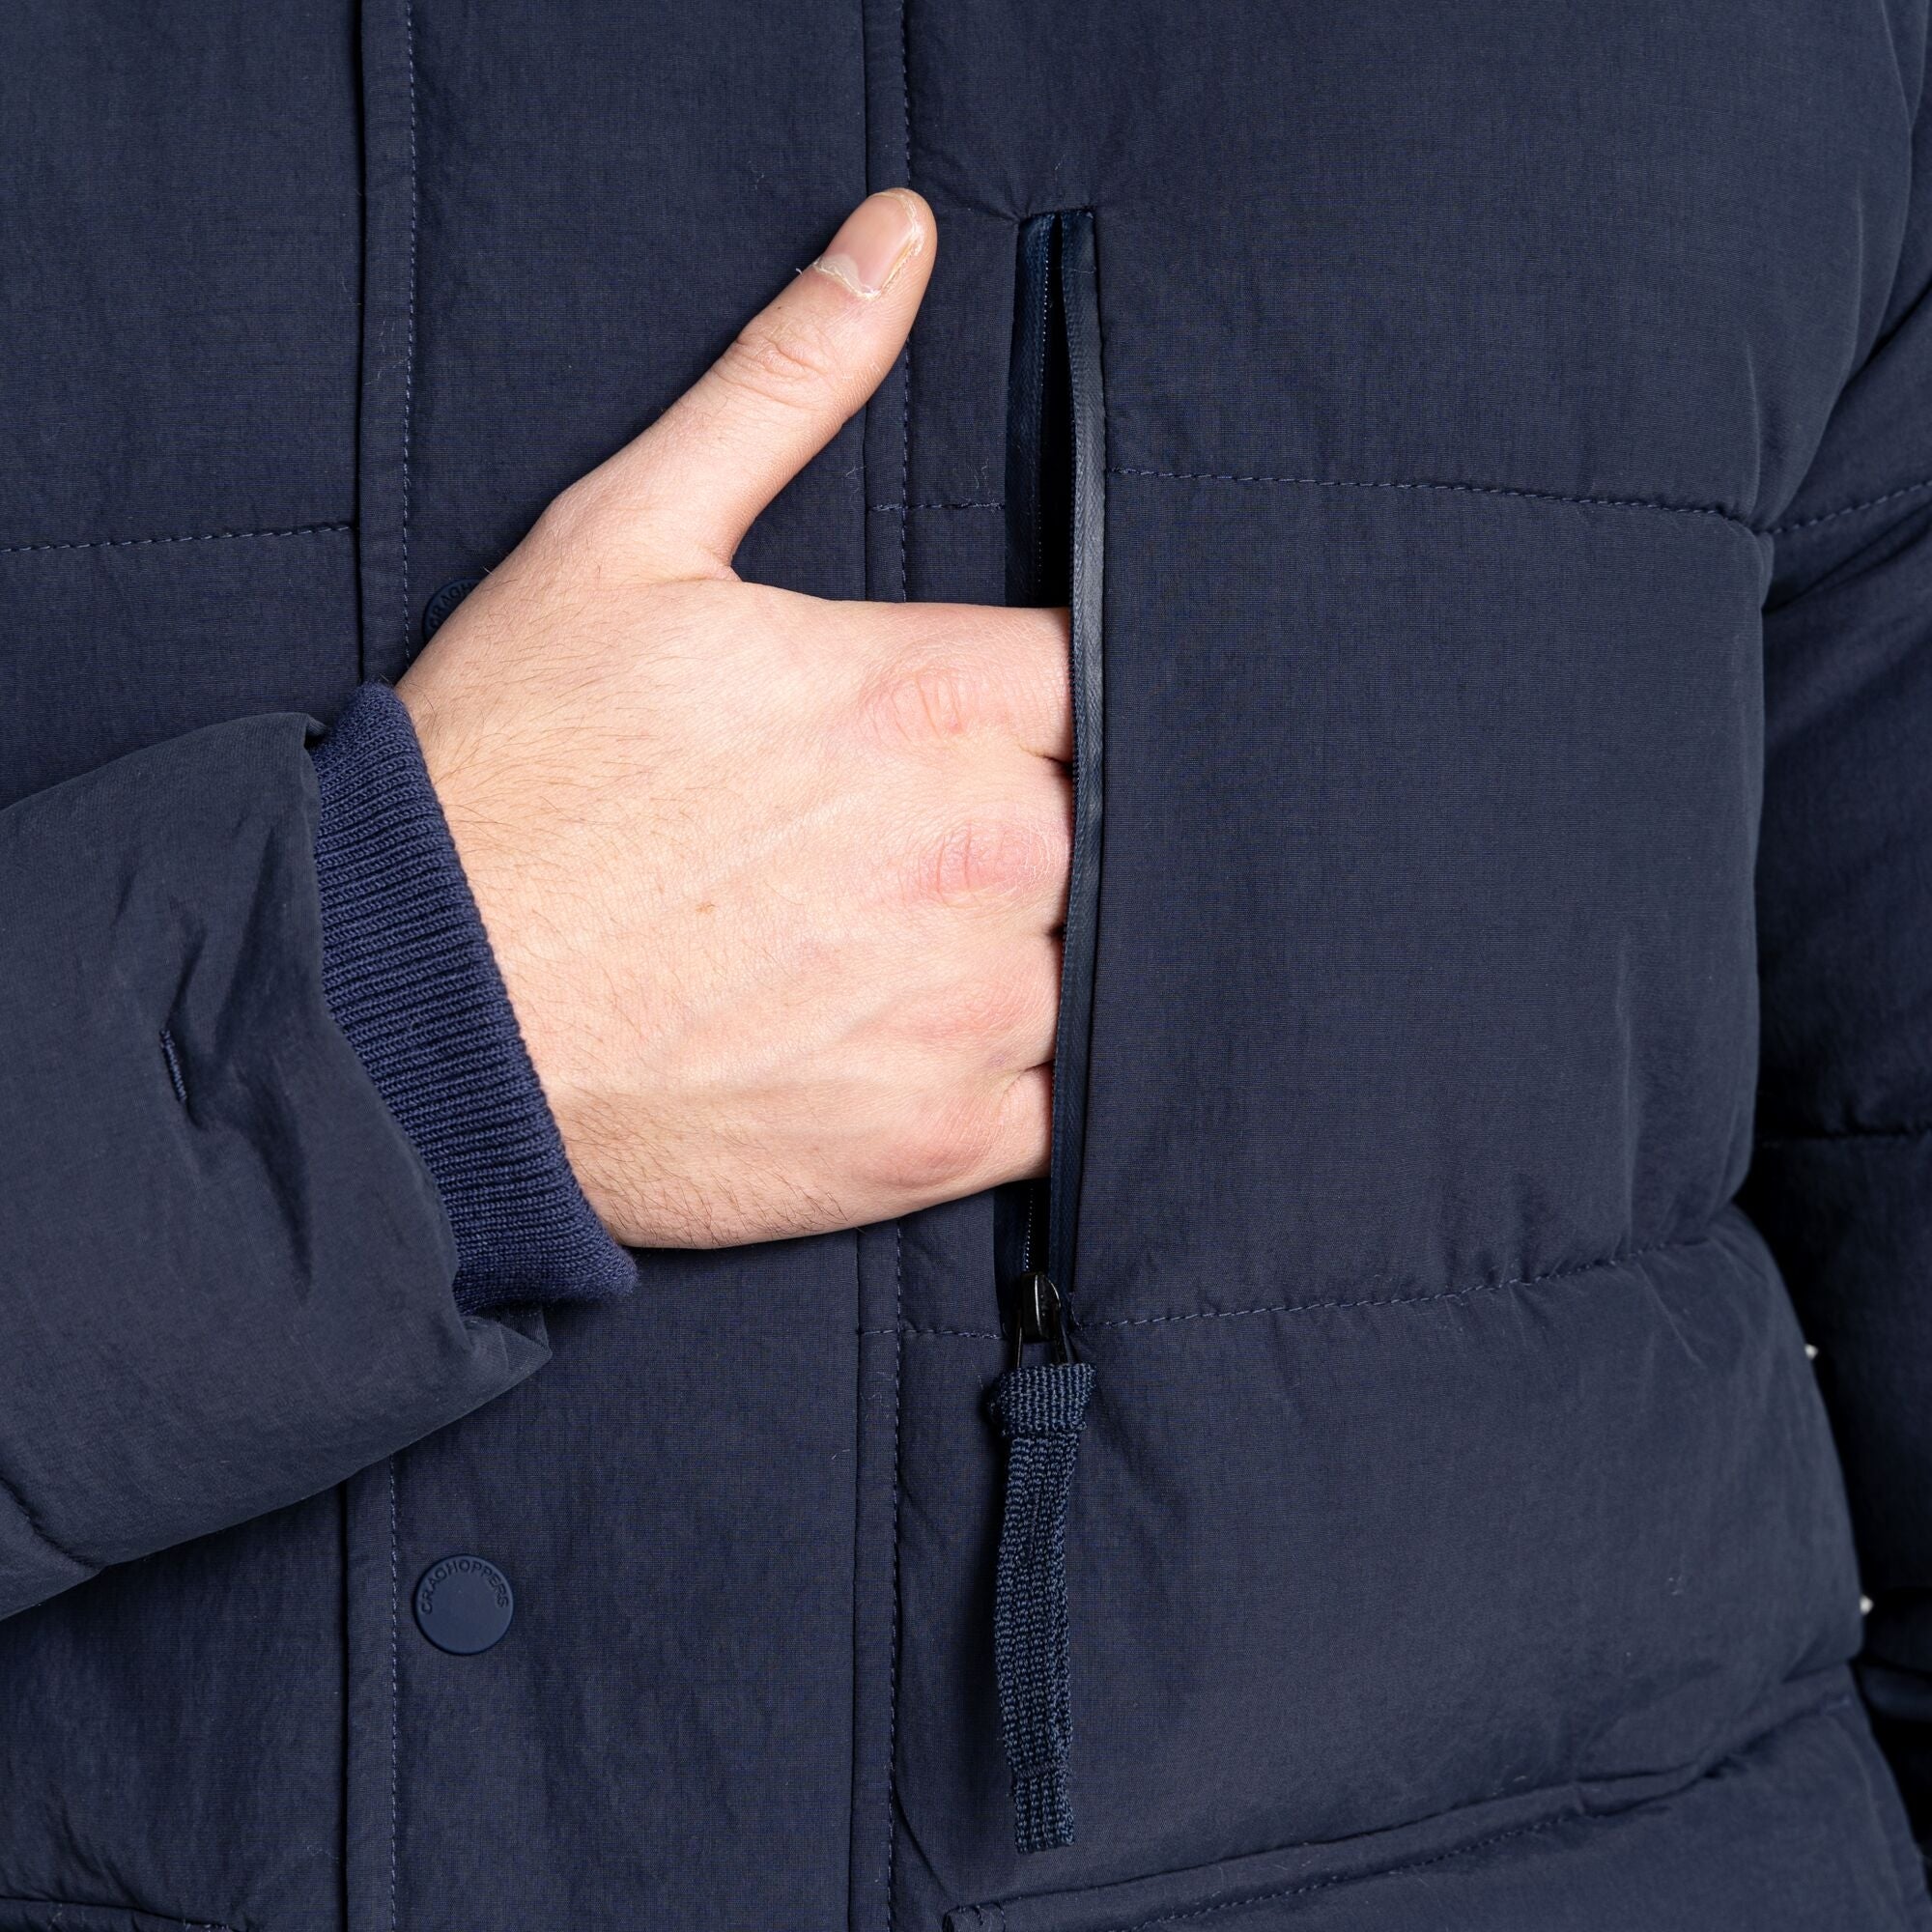 Men's Dunbeath Insulated Hooded Jacket | Blue Navy